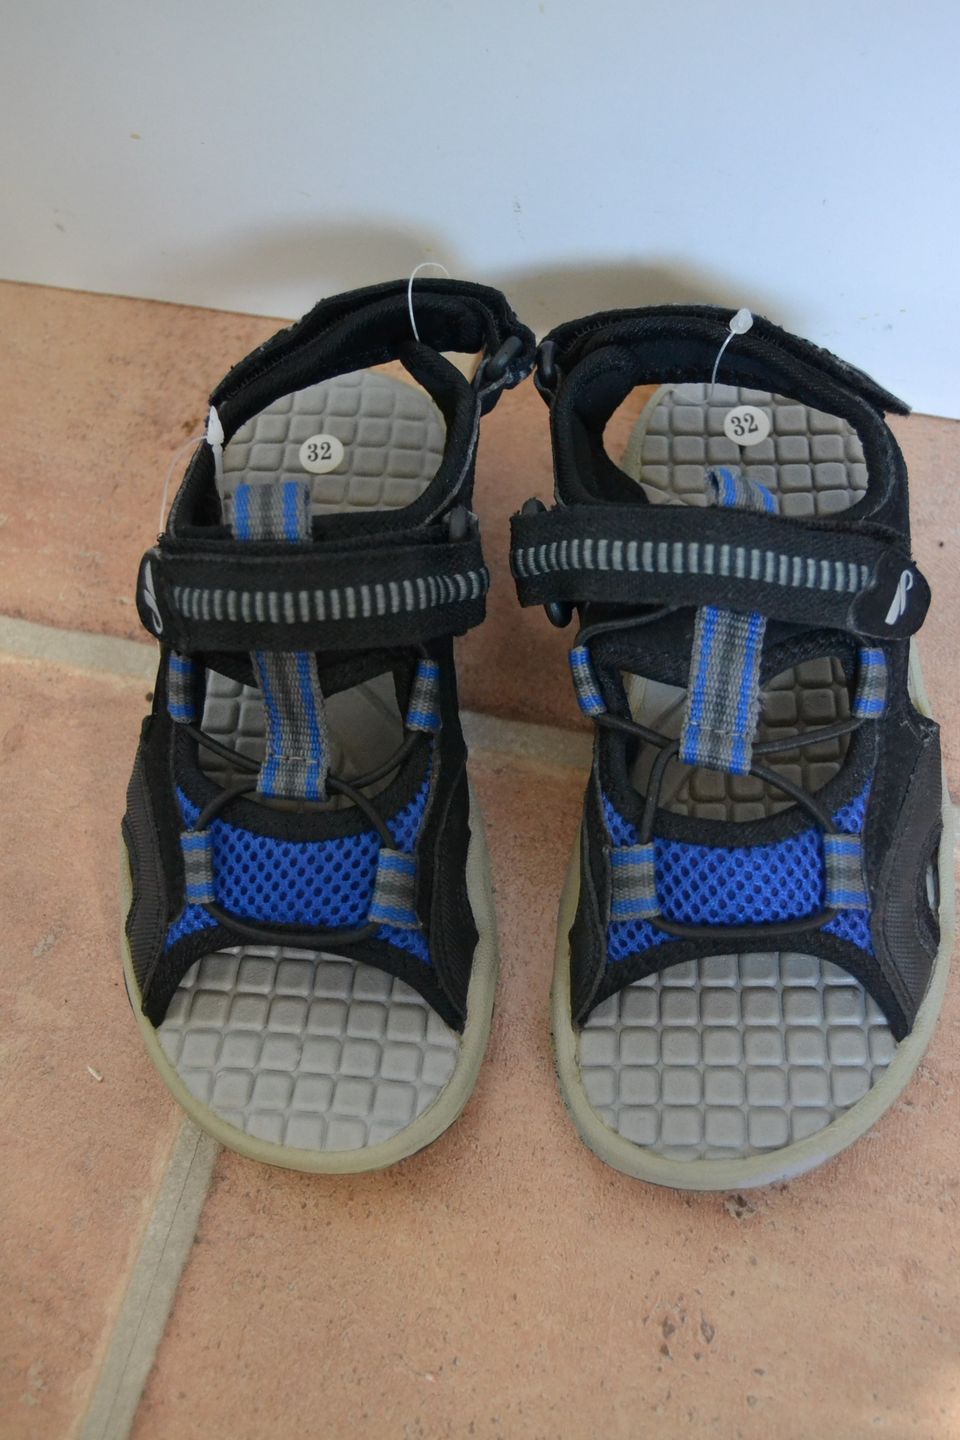 Prosec sini-mustat sandaalit 32 UUDET